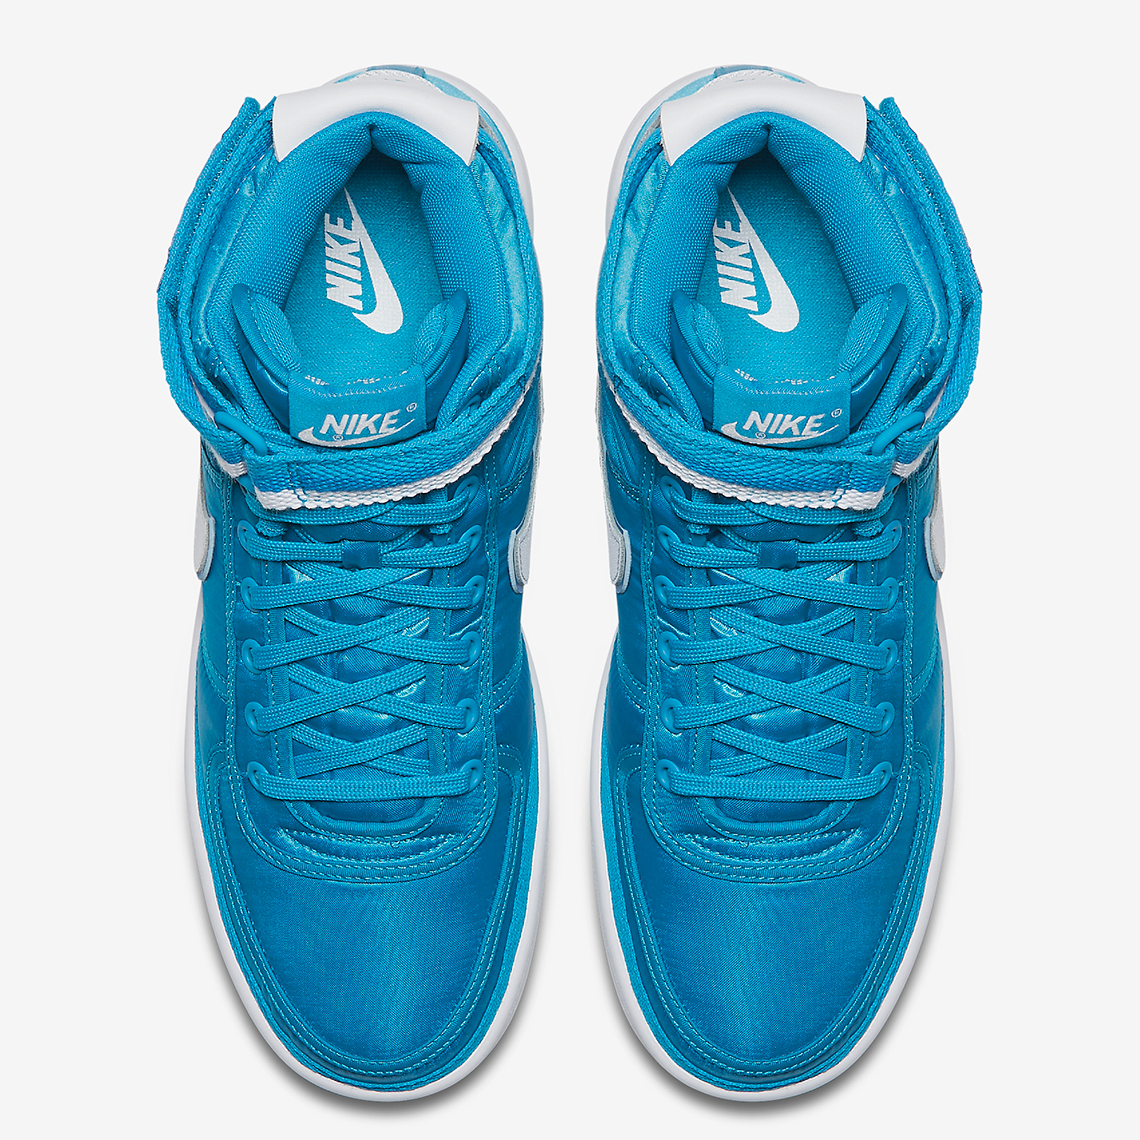 Nike Vandal Supreme Available Now SneakerNews.com